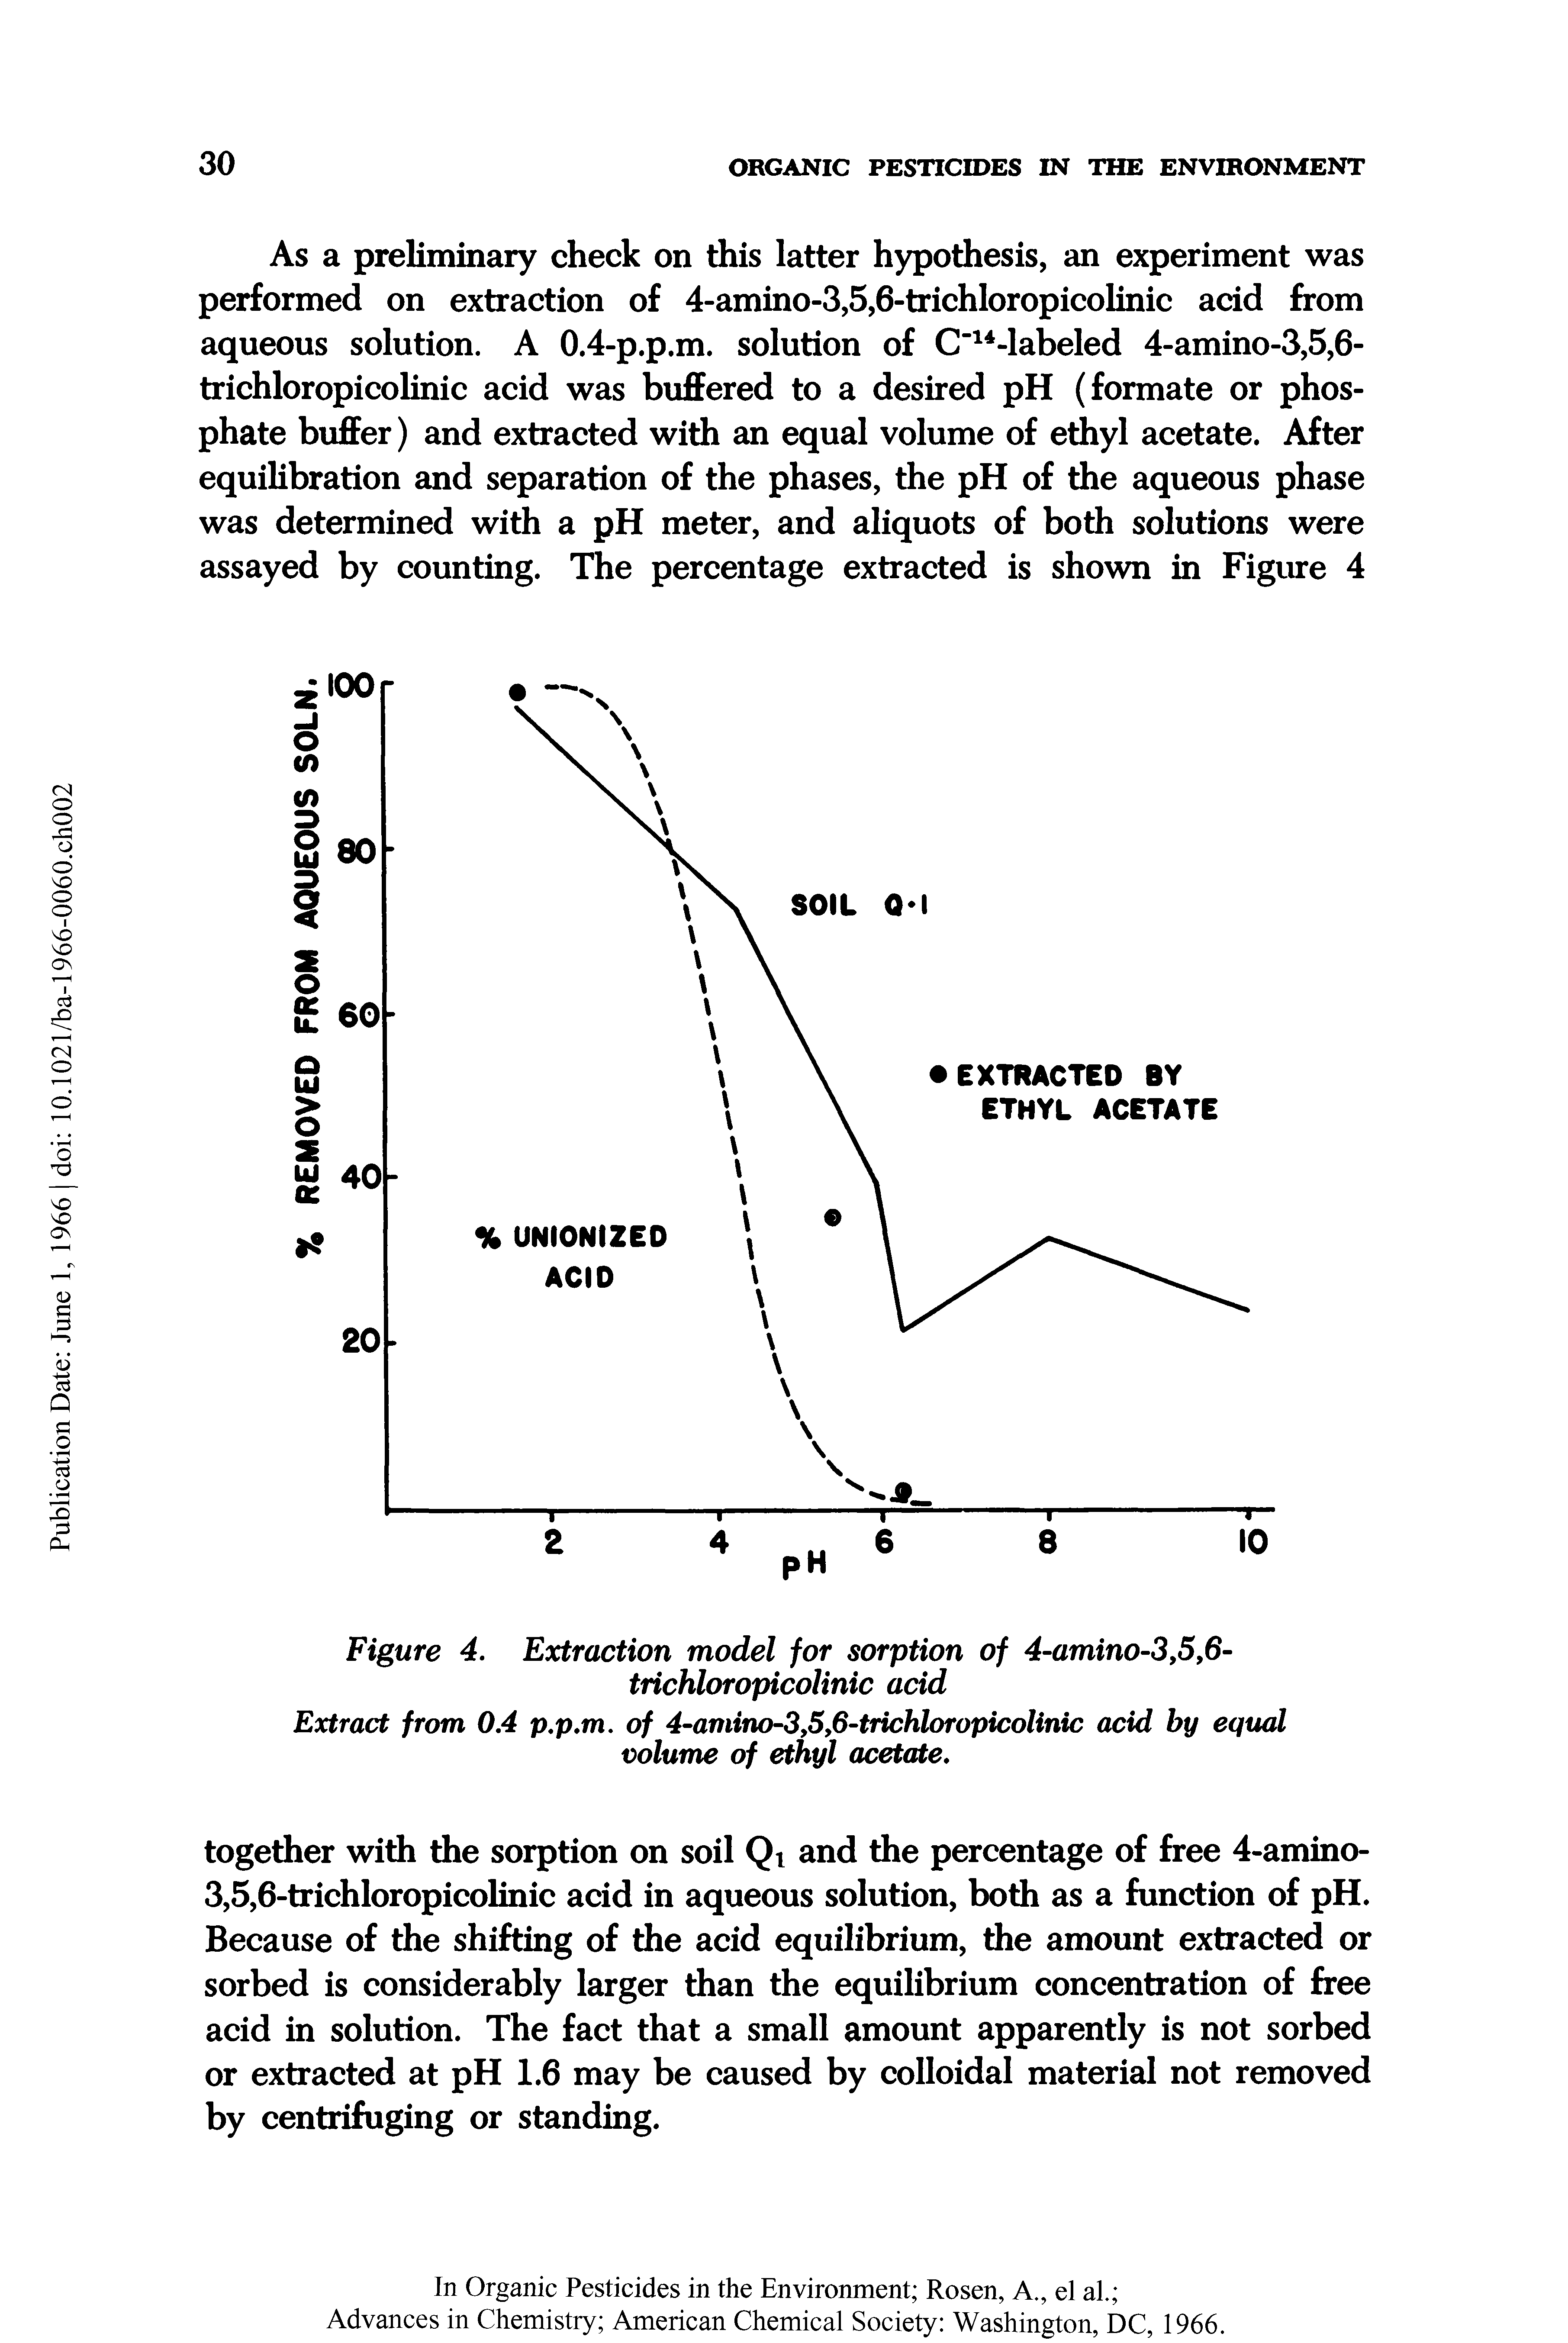 Figure 4. Extraction model for sorption of 4-amino-3,5,6-trichloropicolinic acid...